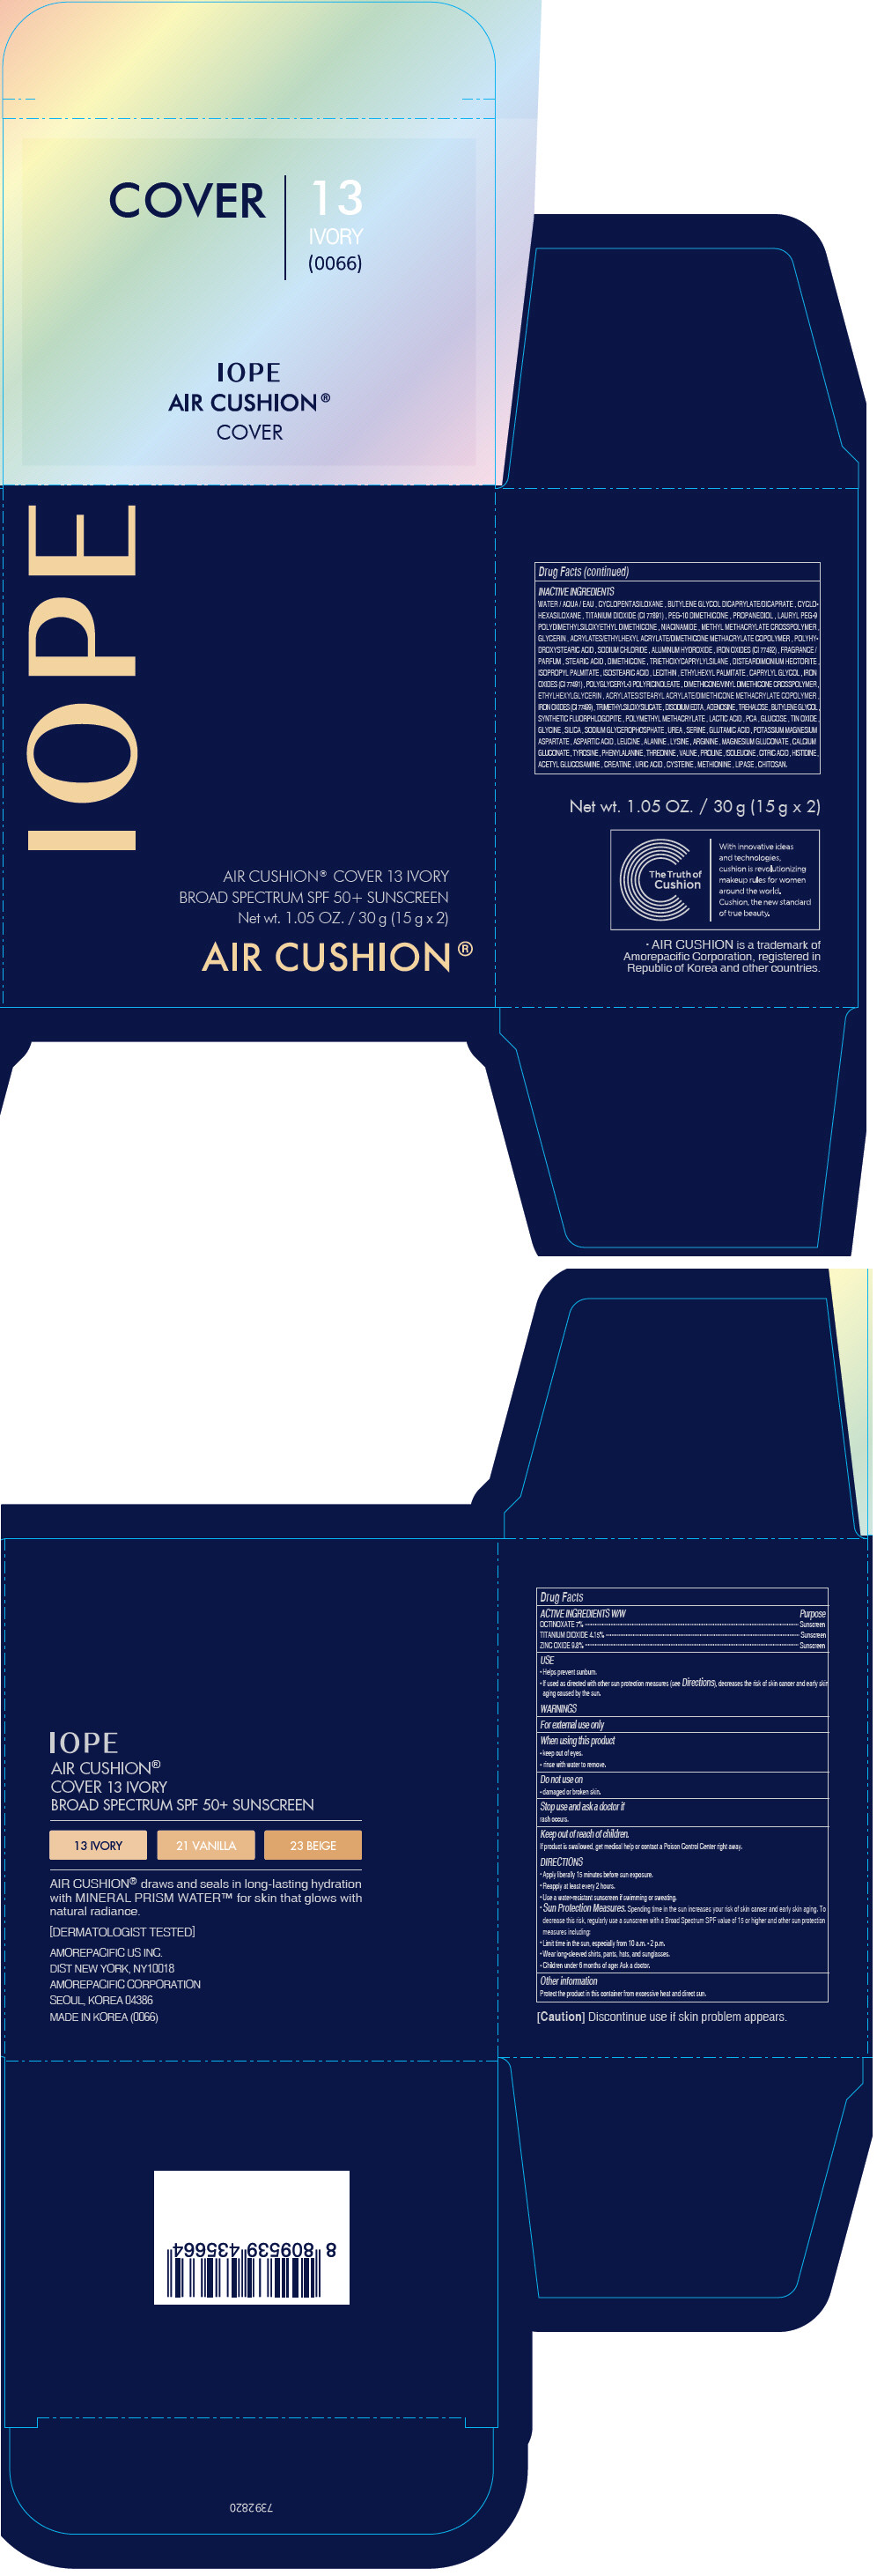 PRINCIPAL DISPLAY PANEL - 15 g Container Carton - 13 Ivory